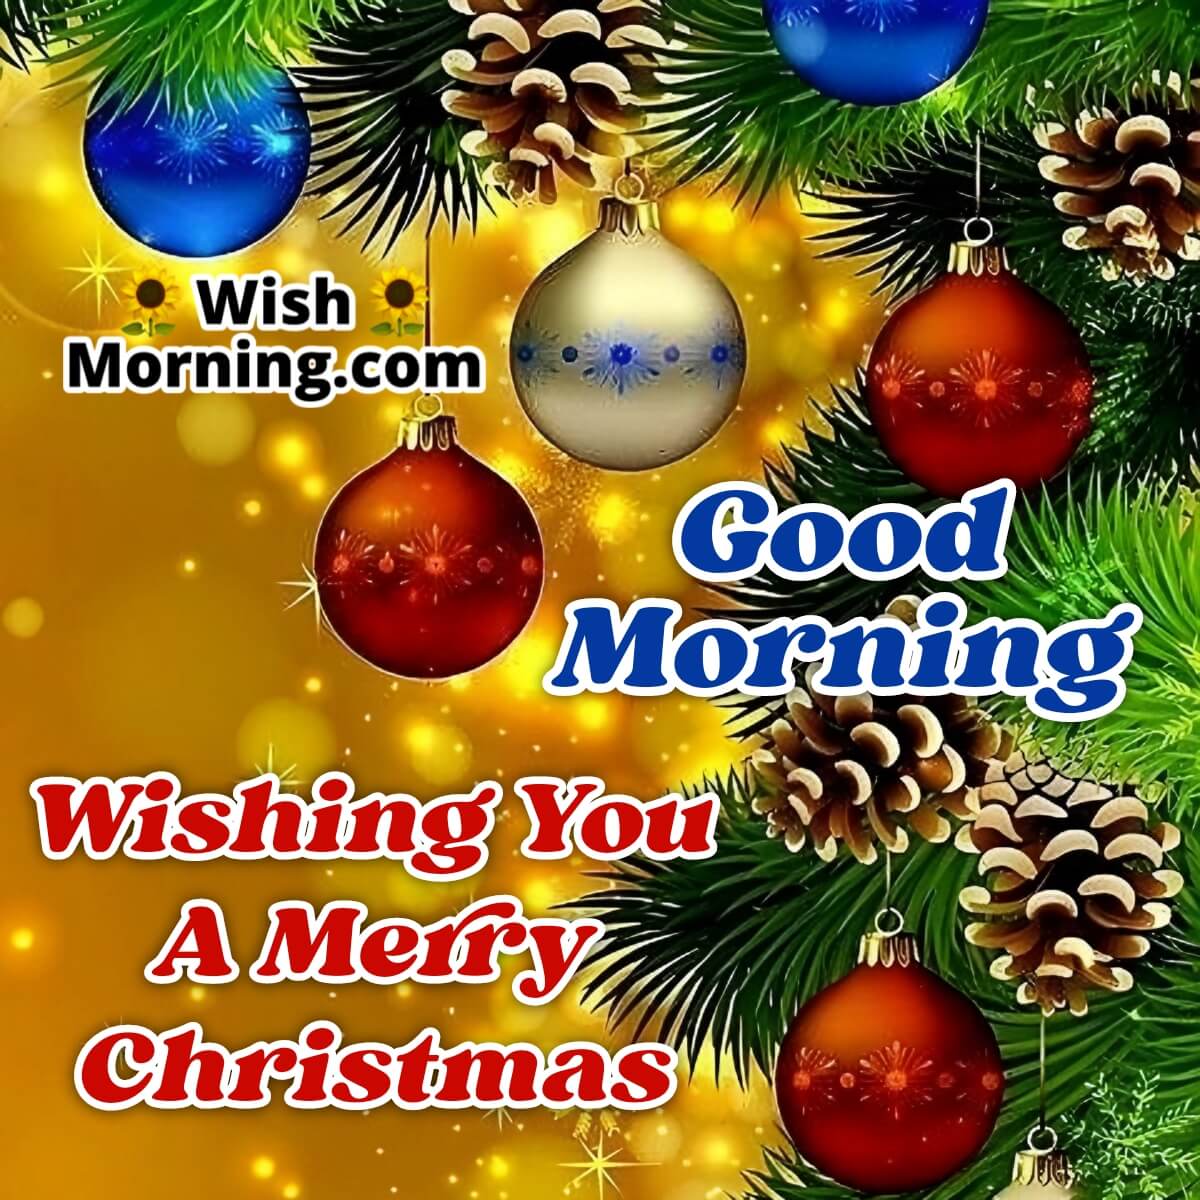 Good Morning Wishing You A Merry Christmas